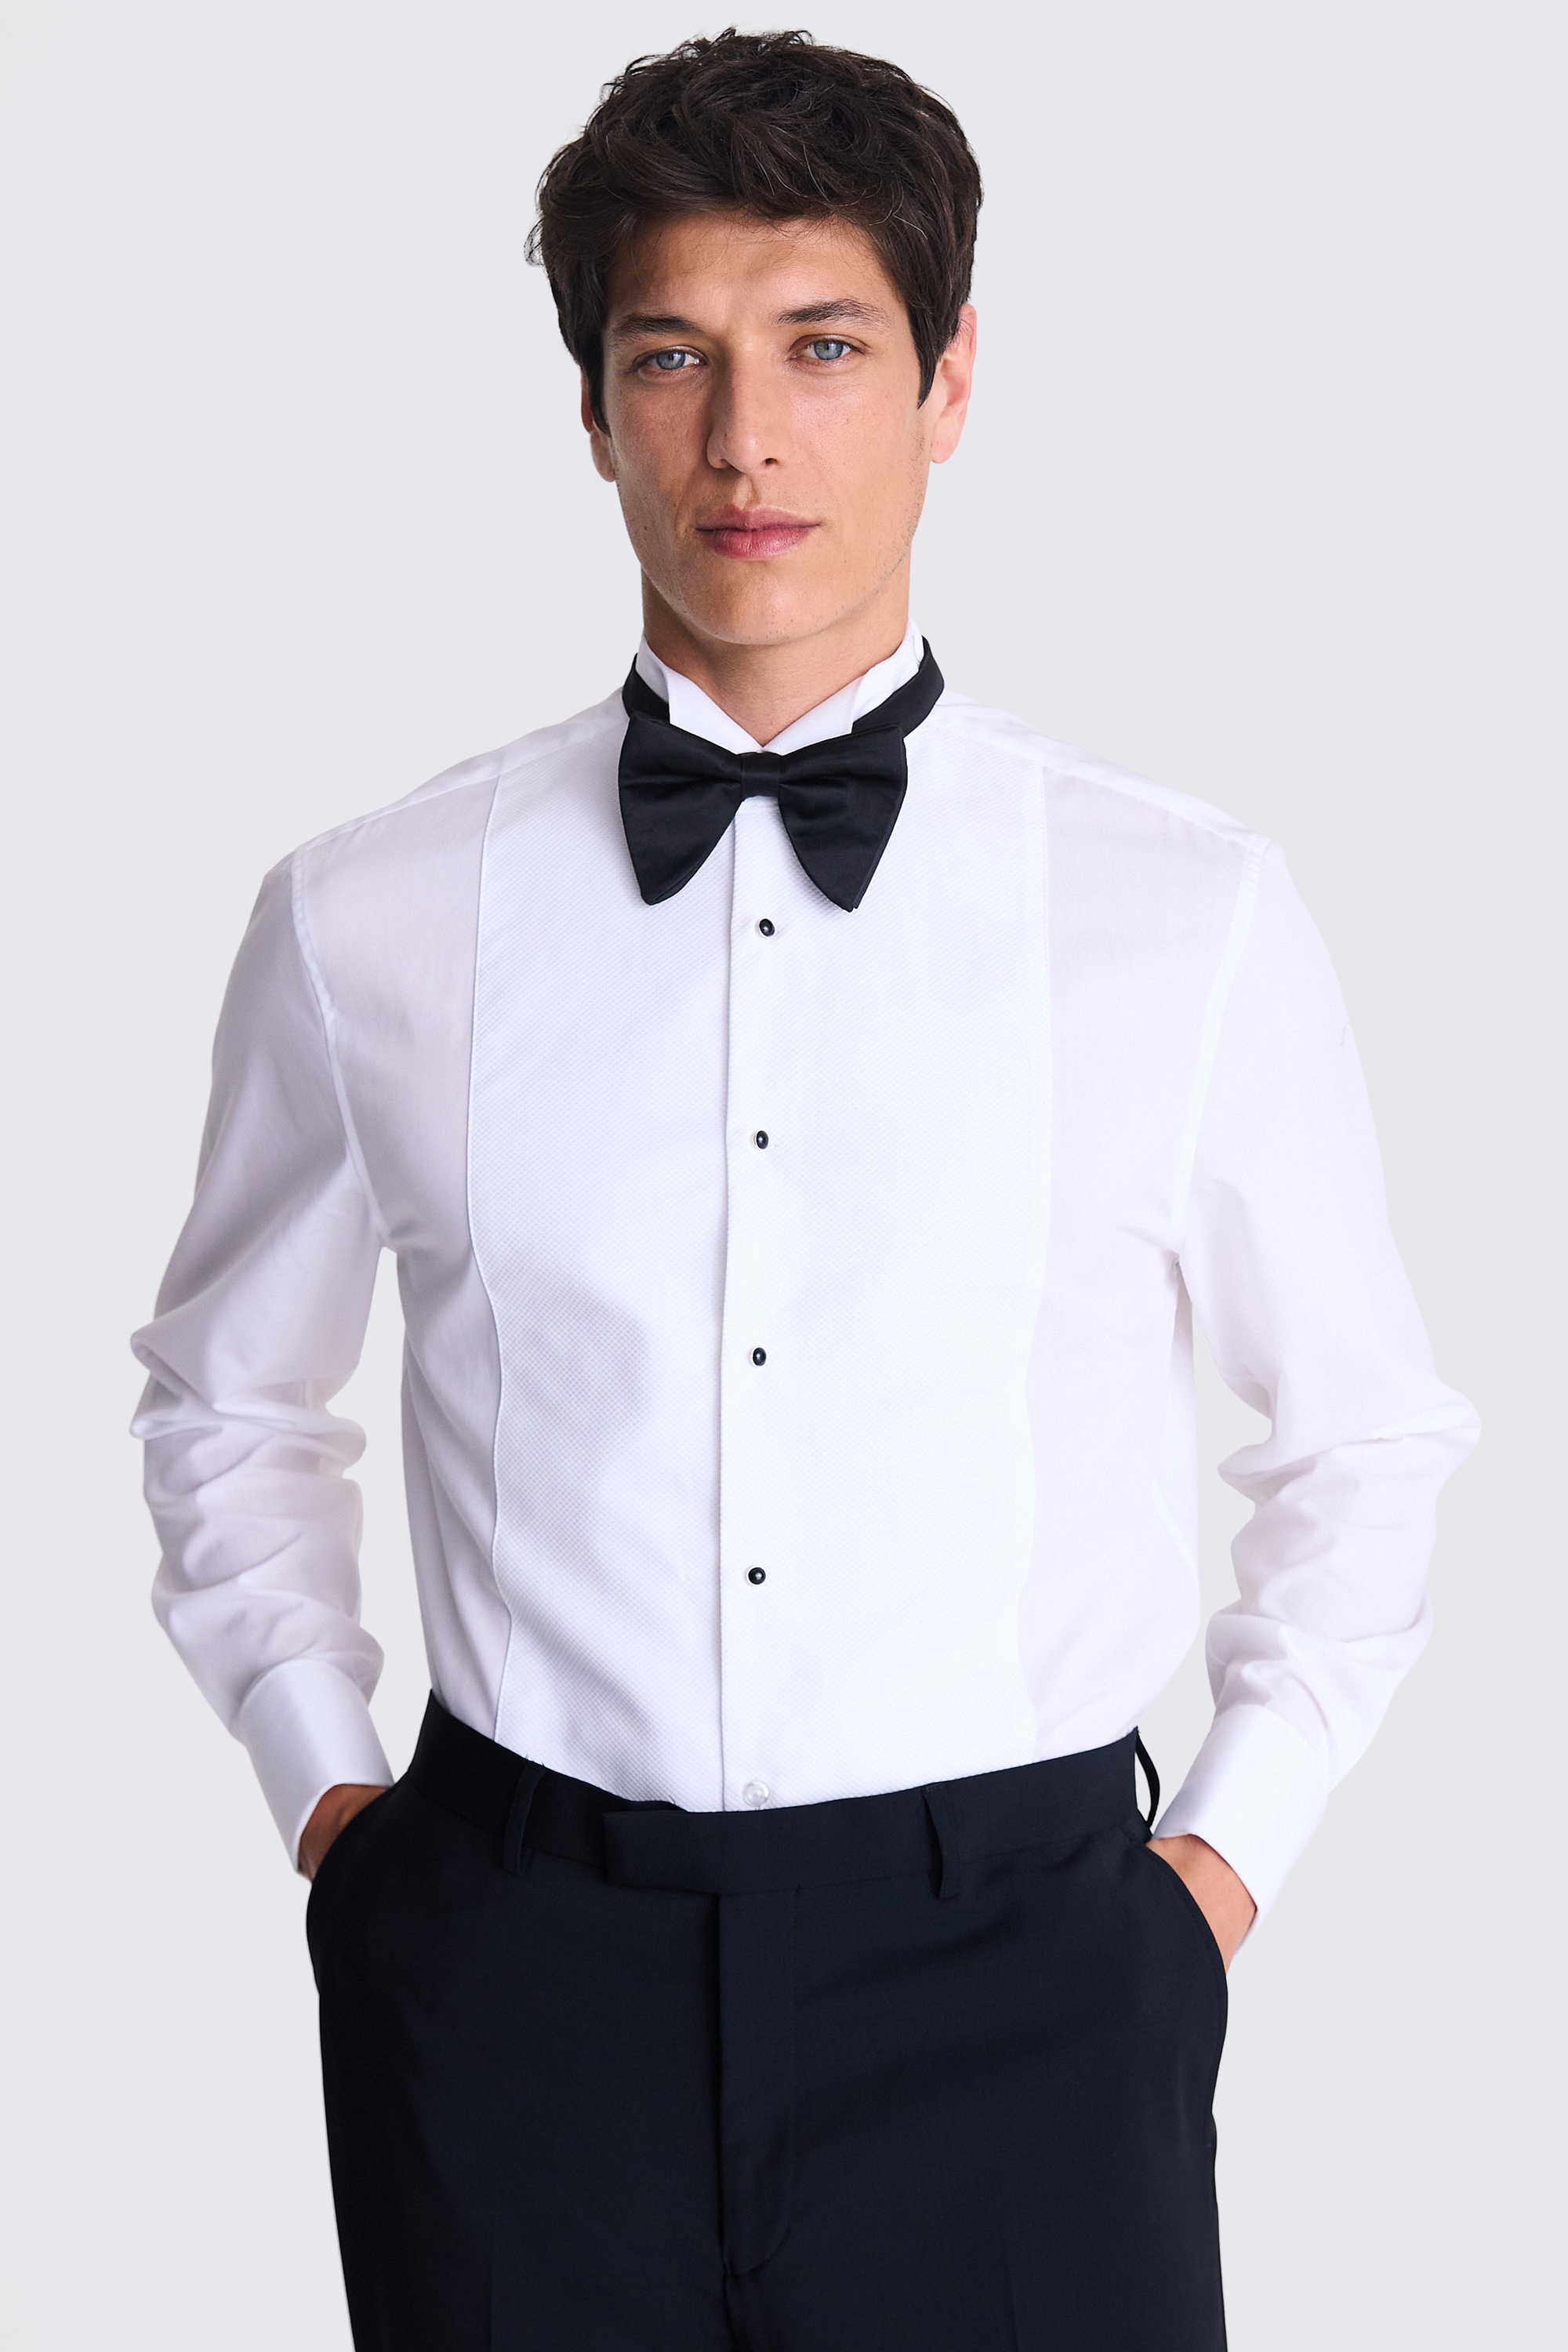 Regular Fit White Wing Collar Marcella Dress Shirt | Buy Online at Moss